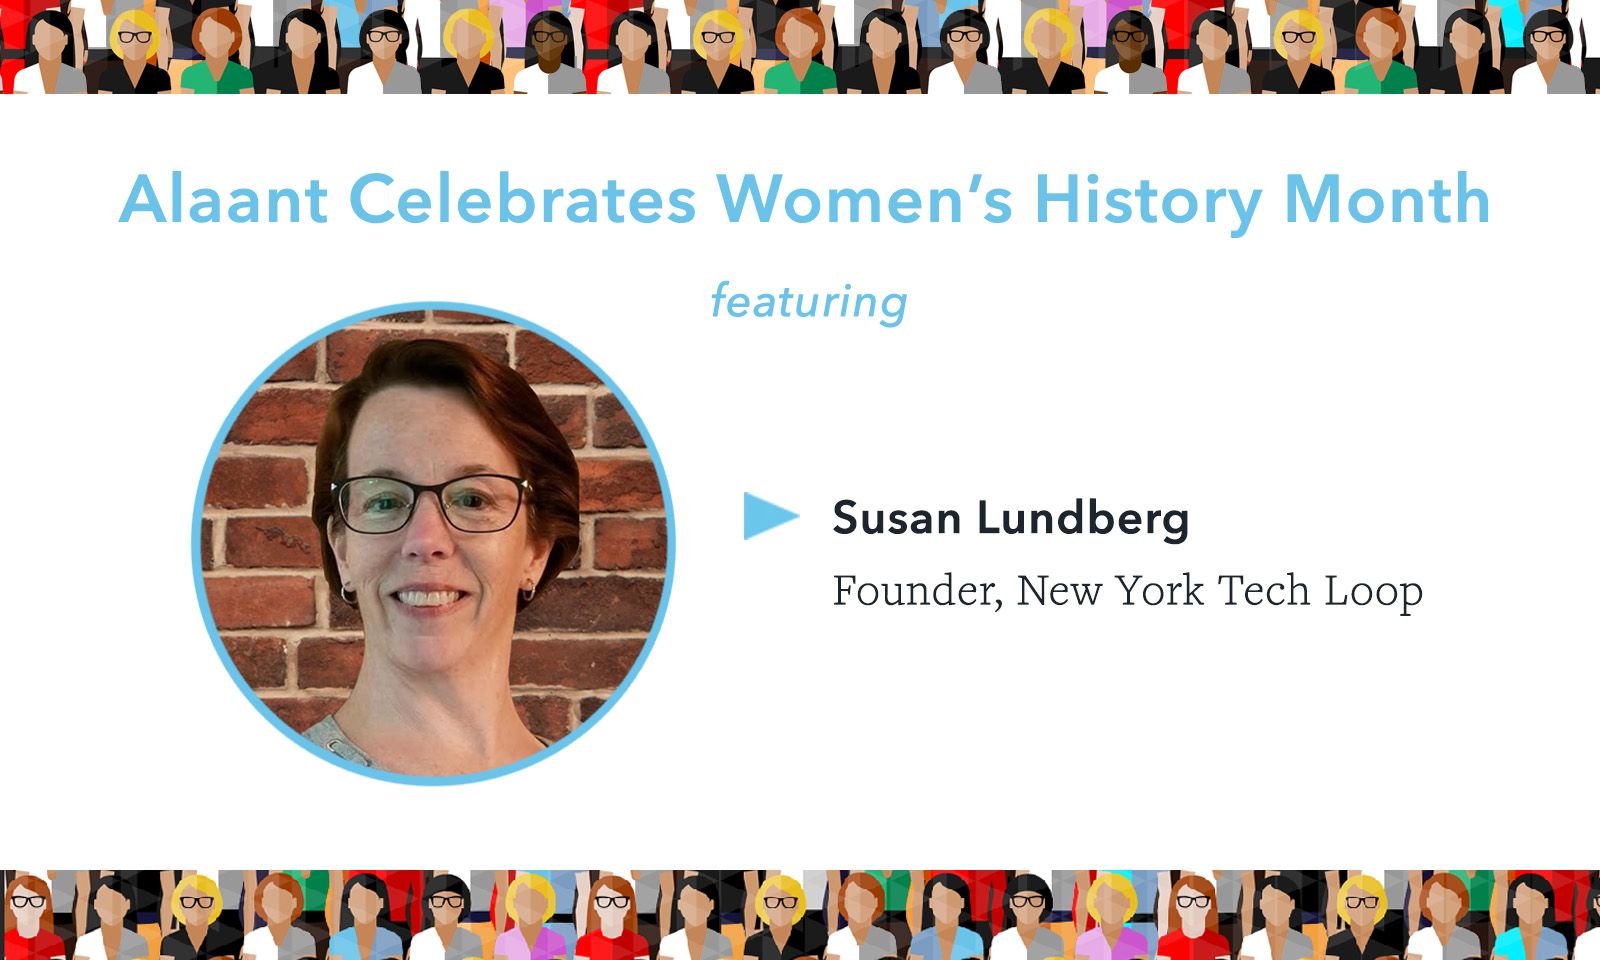 Alaant Celebrates Women’s History Month with Susan Lundberg